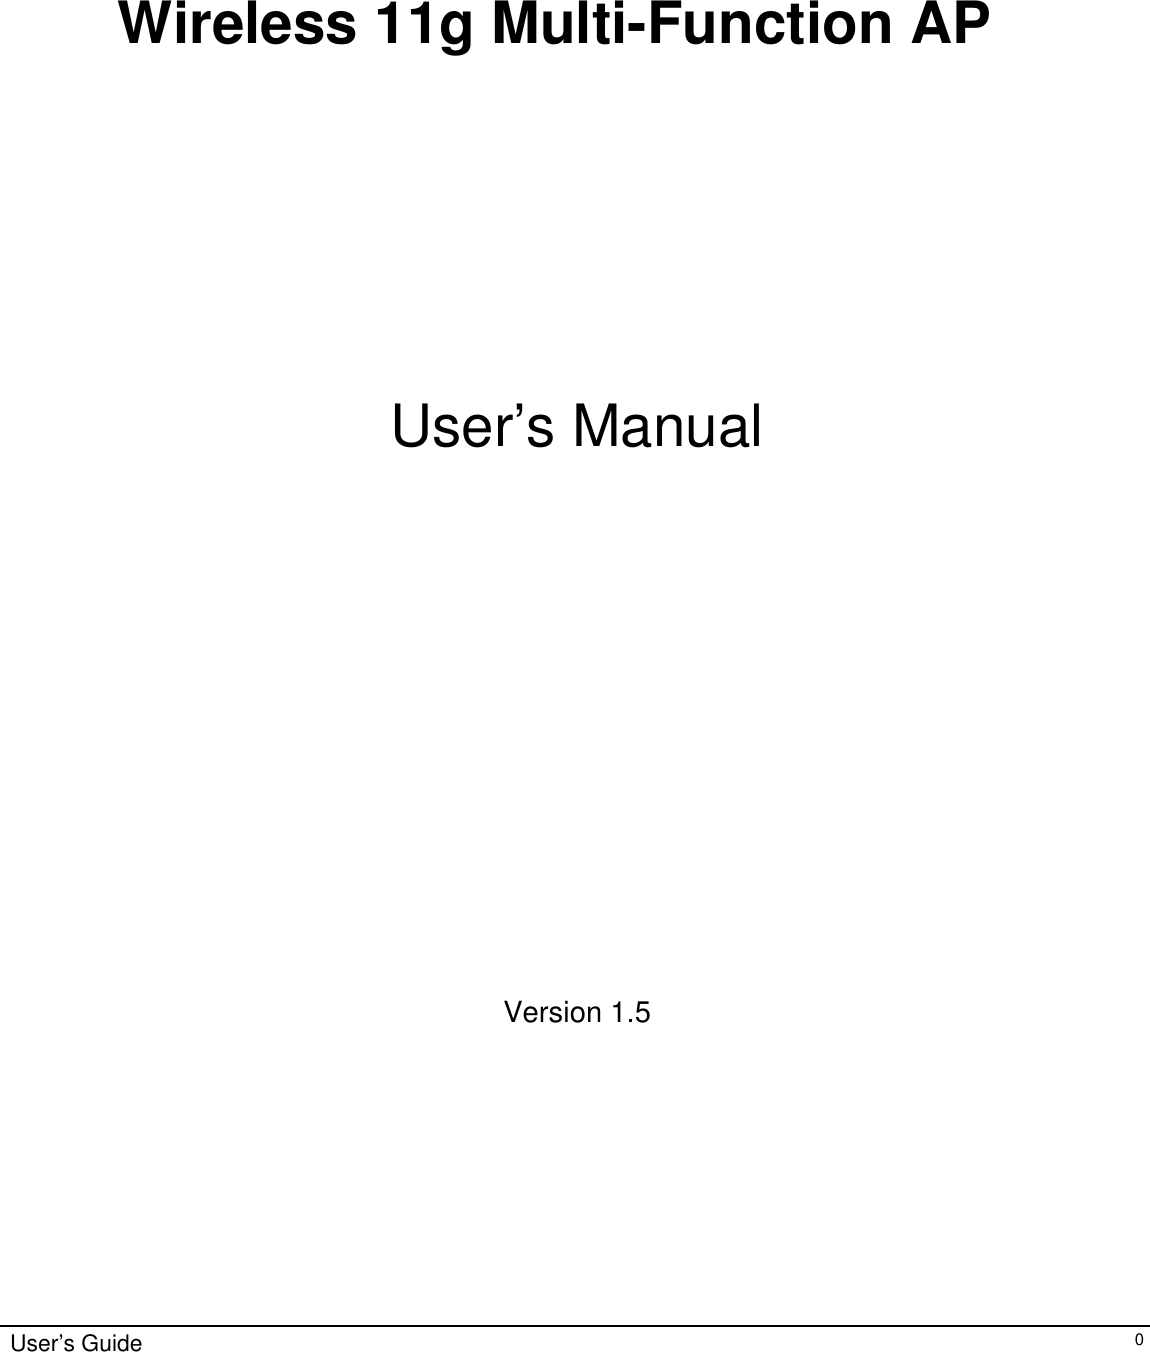                  Wireless 11g Multi-Function AP       User’s Manual              Version 1.5        User’s Guide   0